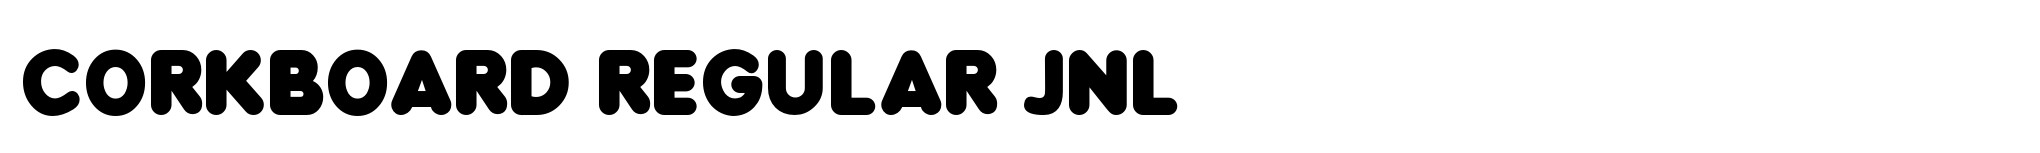 Corkboard Regular JNL image